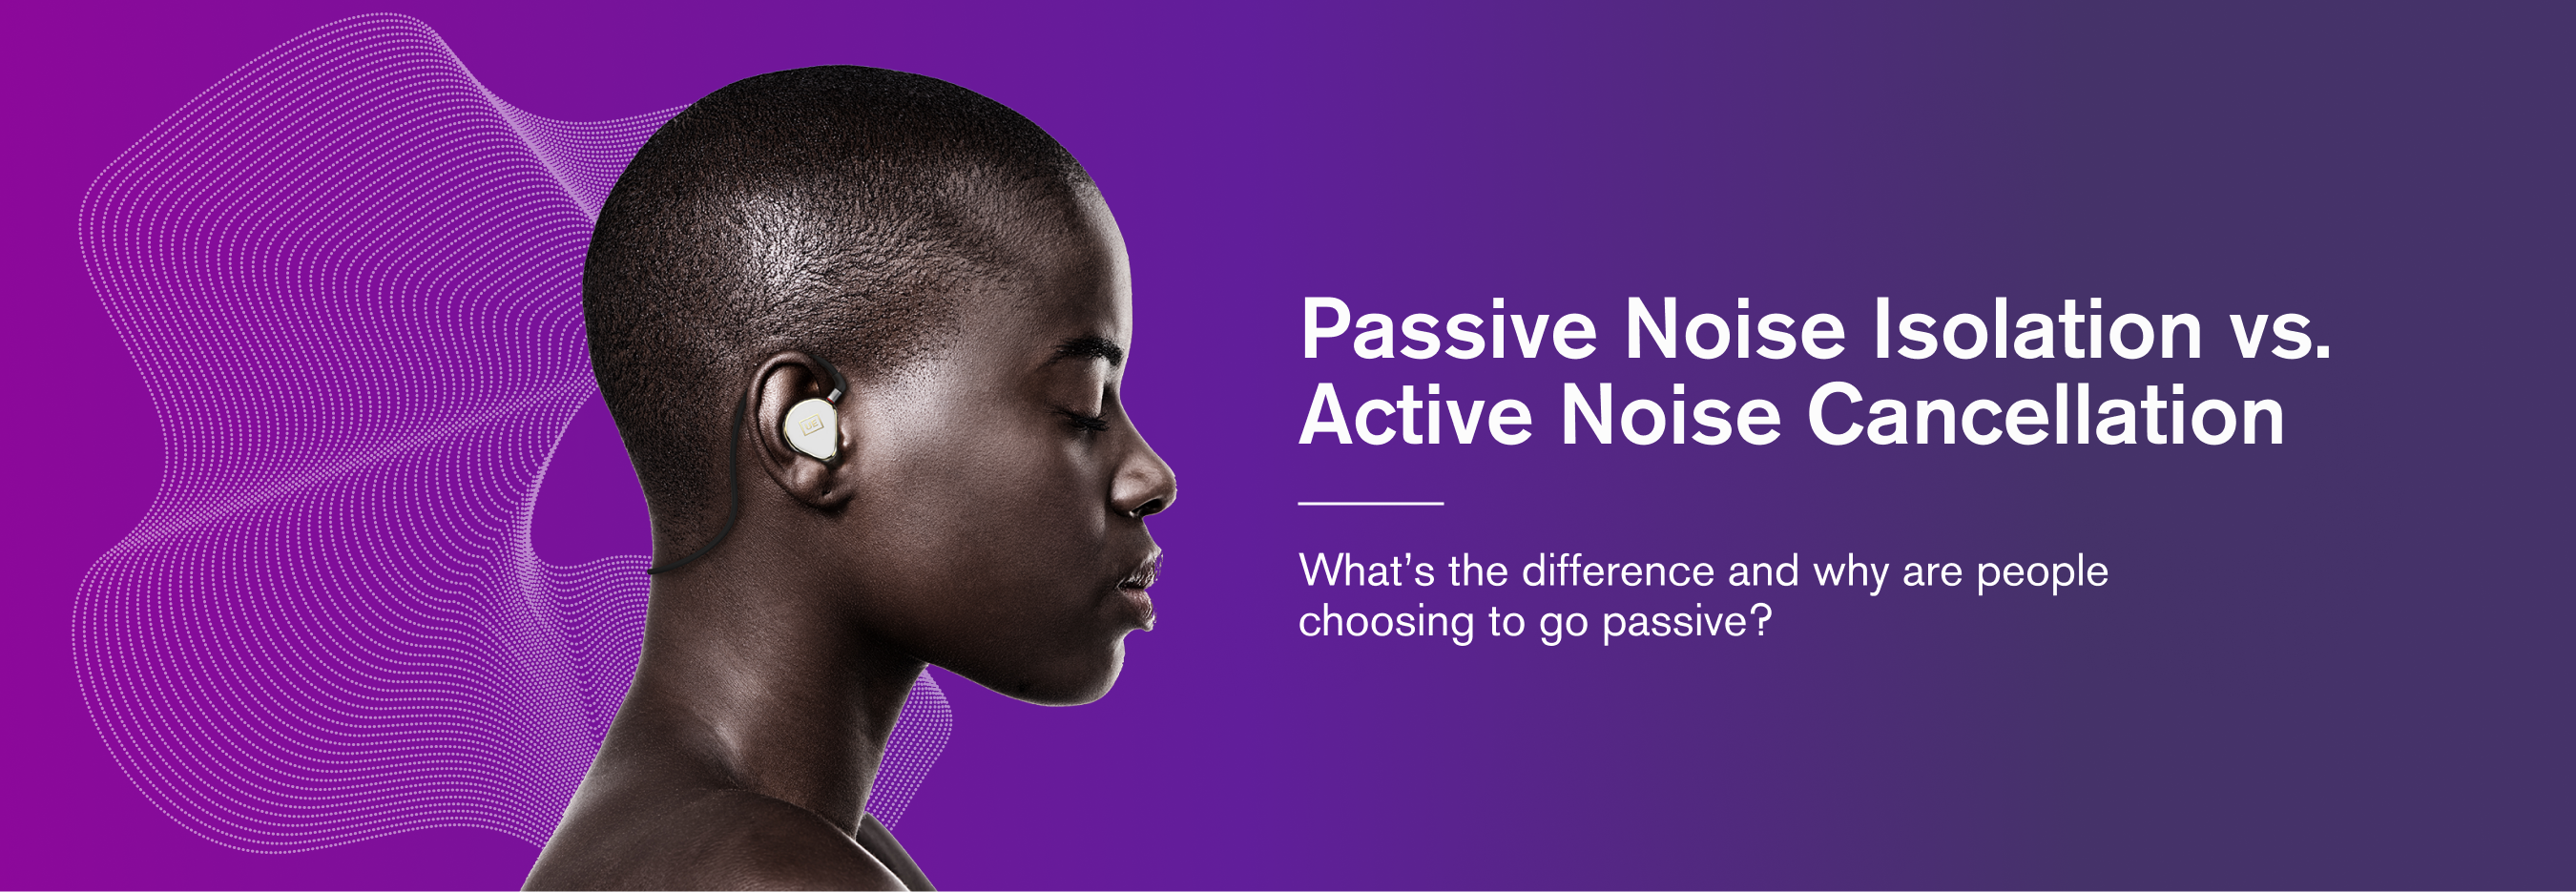 Passive Noise Isolation vs. Active Noise Cancellation